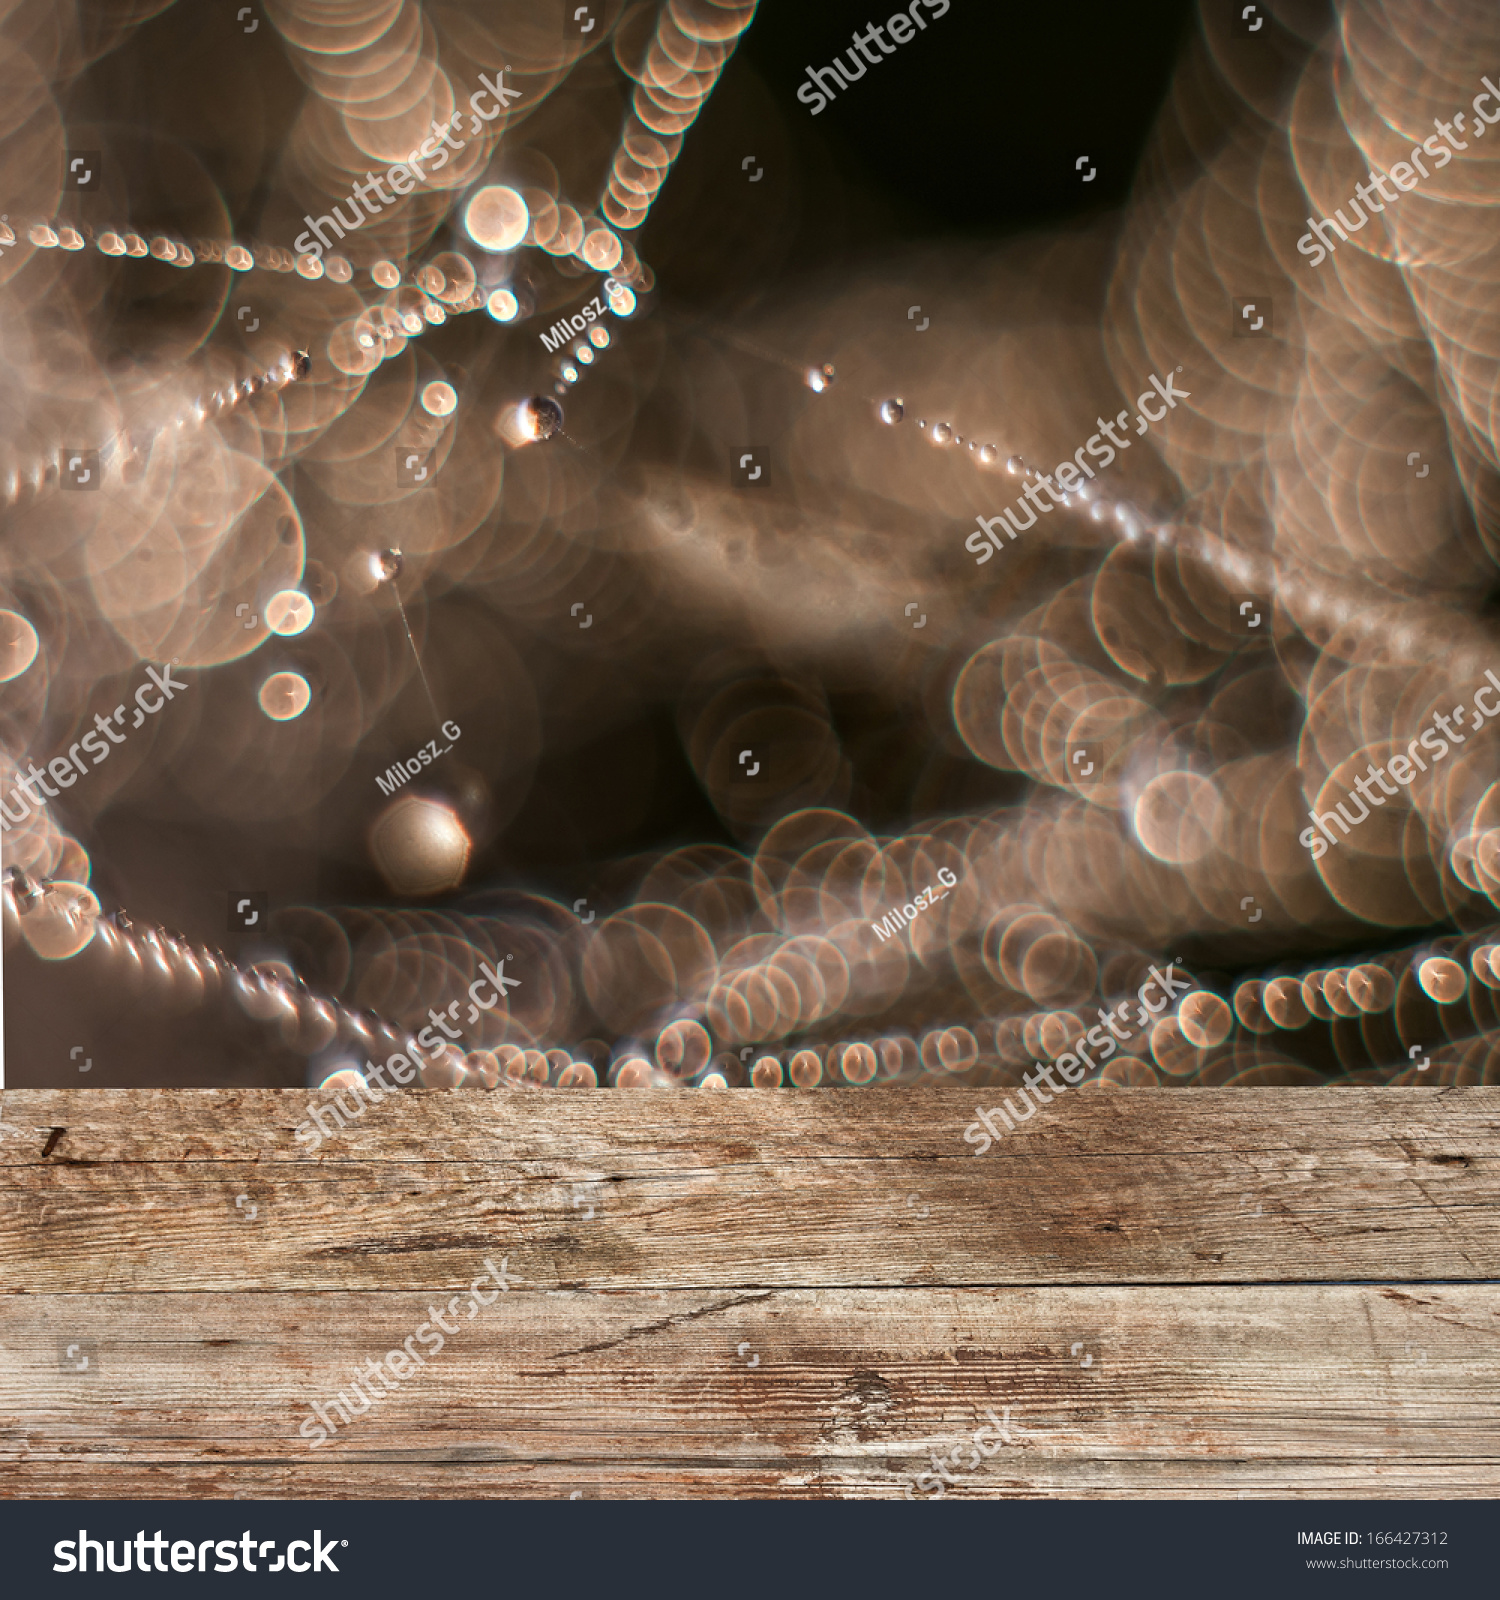 Spider Web Droplets Wood Floor Stock Photo 166427312 - Shutterstock